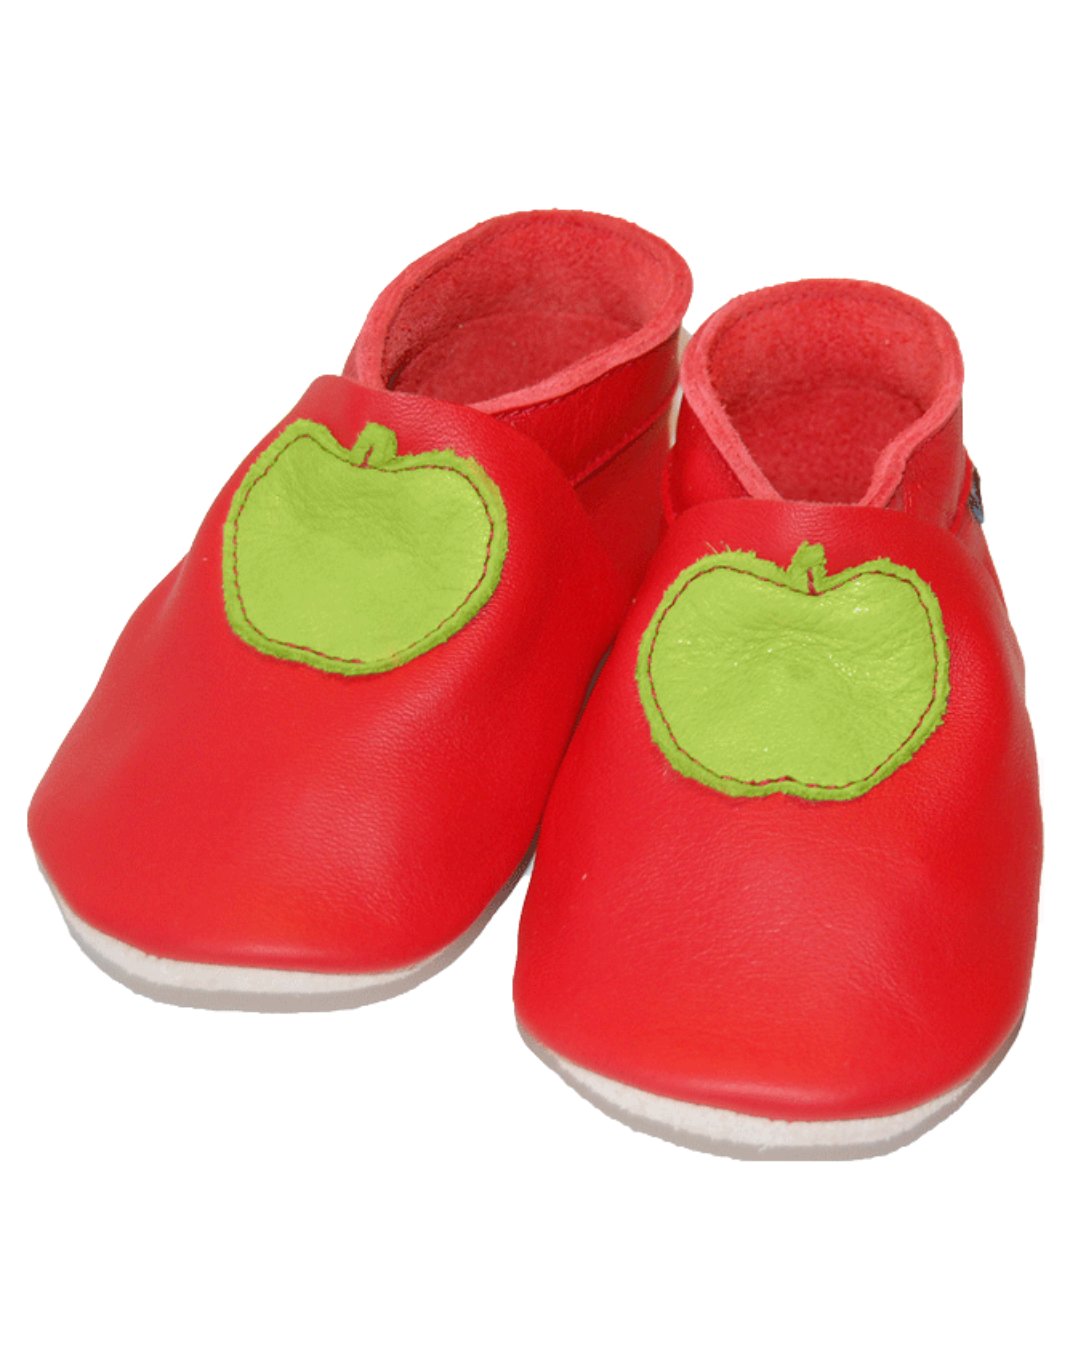 Baby Krabbelschuhe in Rot mit grünem Apfel